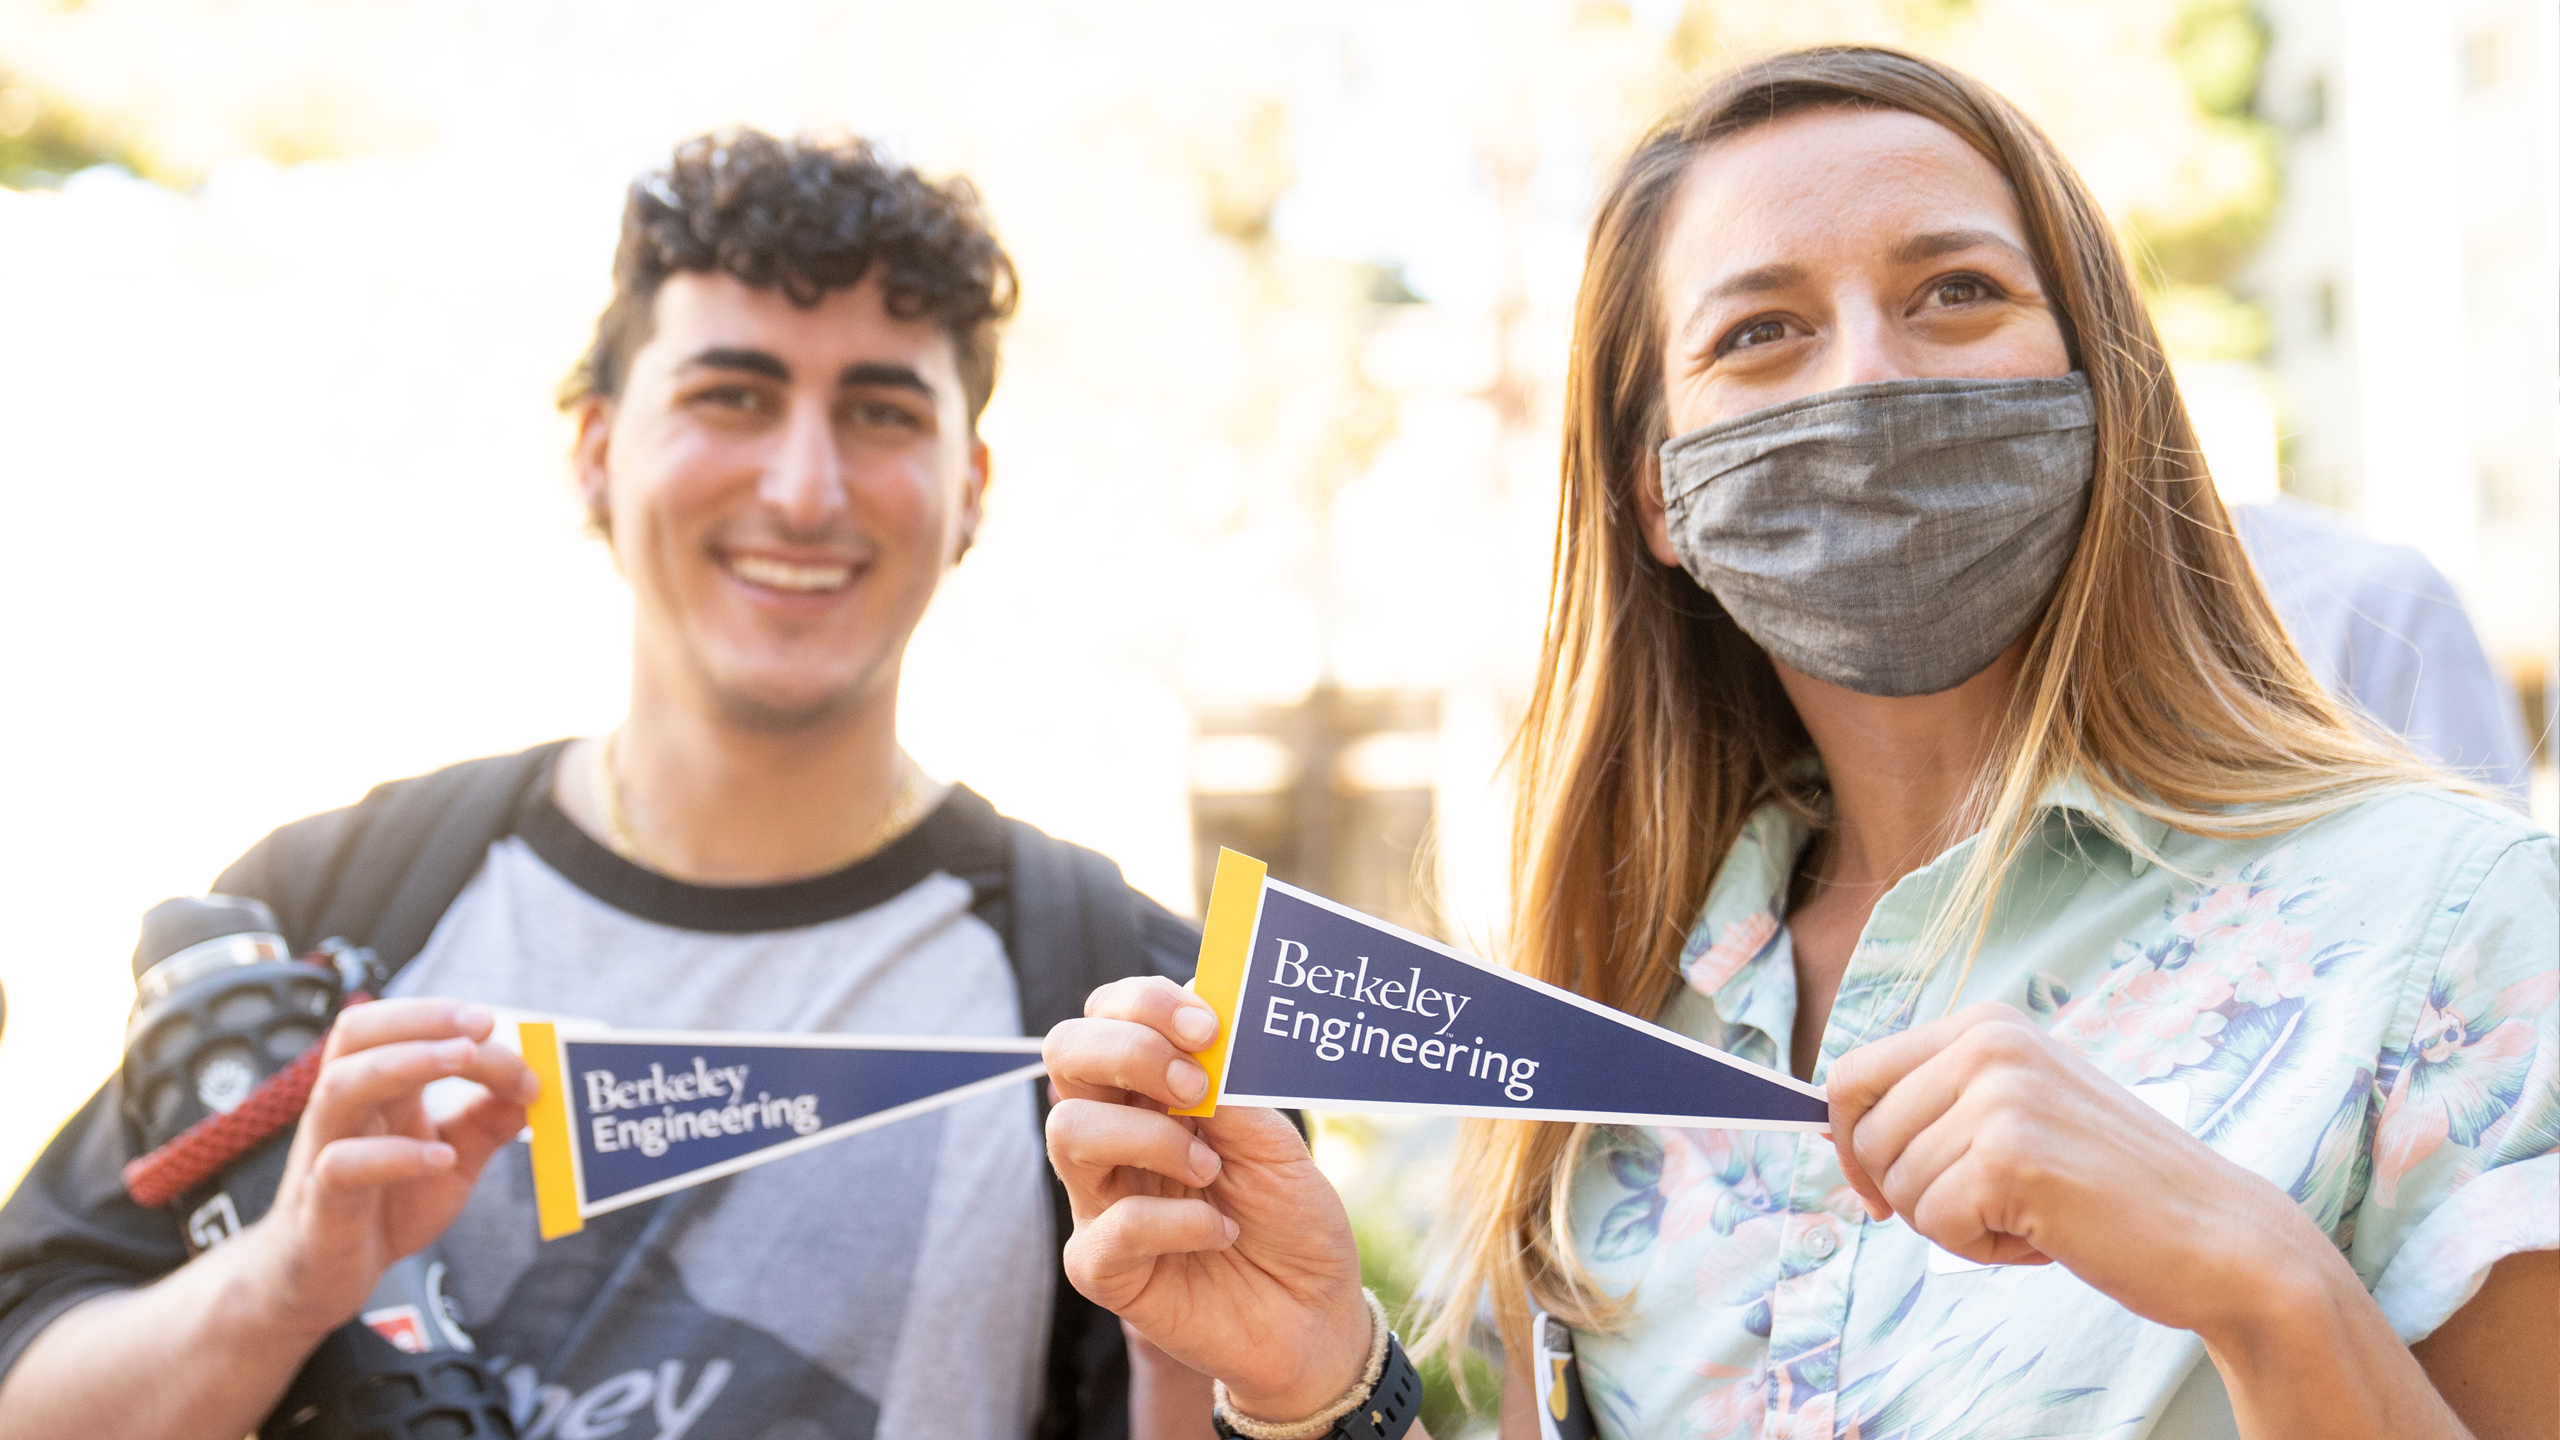 Berkeley Engineering student and staff member holding Berkeley engineering pennants and smiling